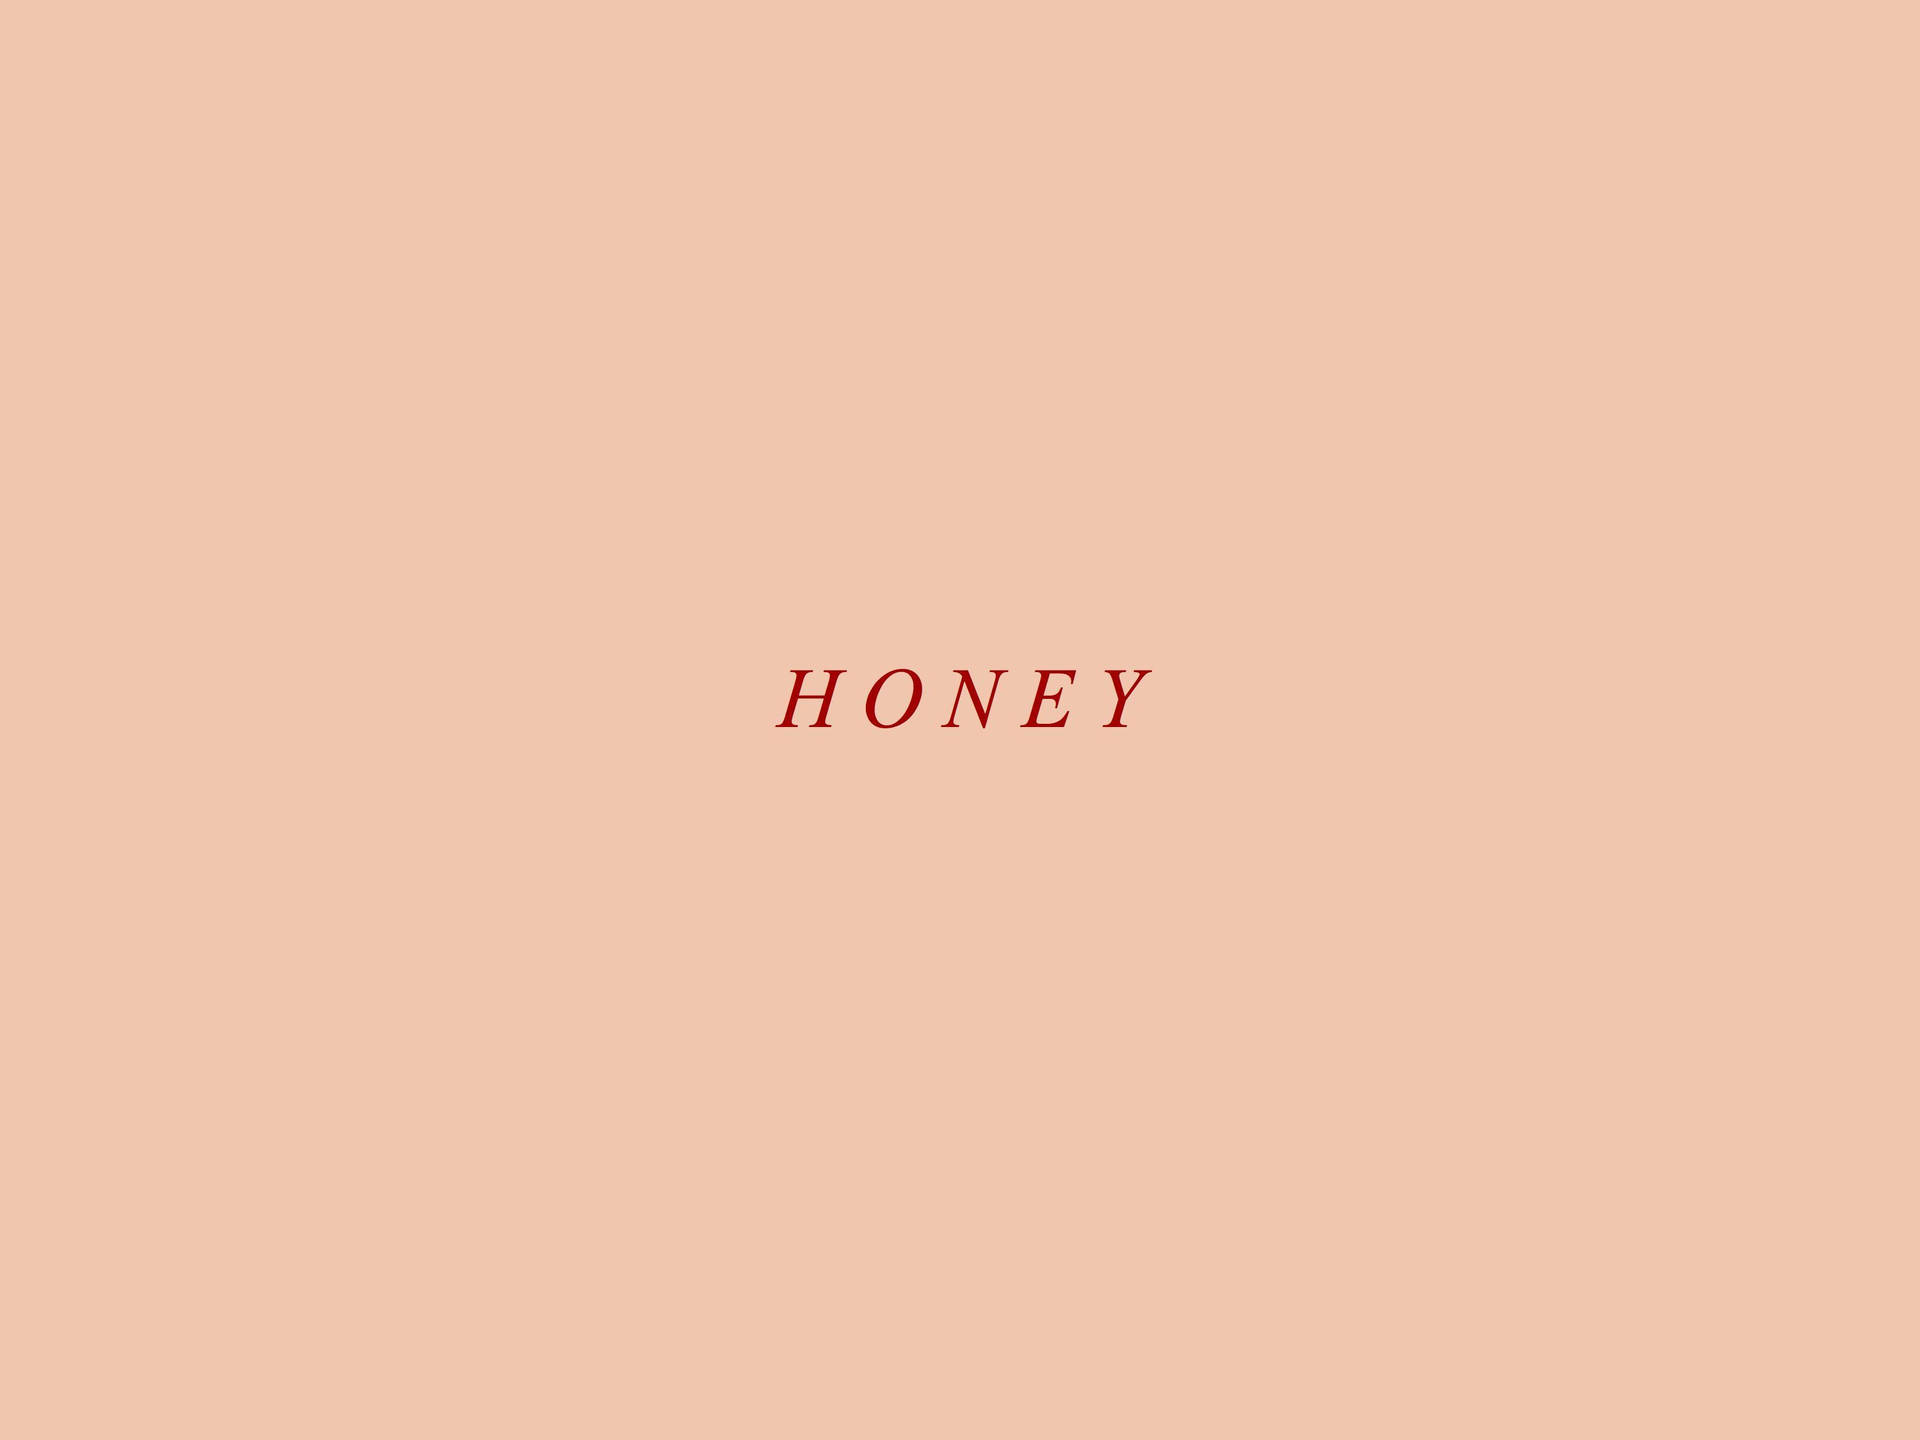 Minimalist Aesthetic Desktop Red Honey Word